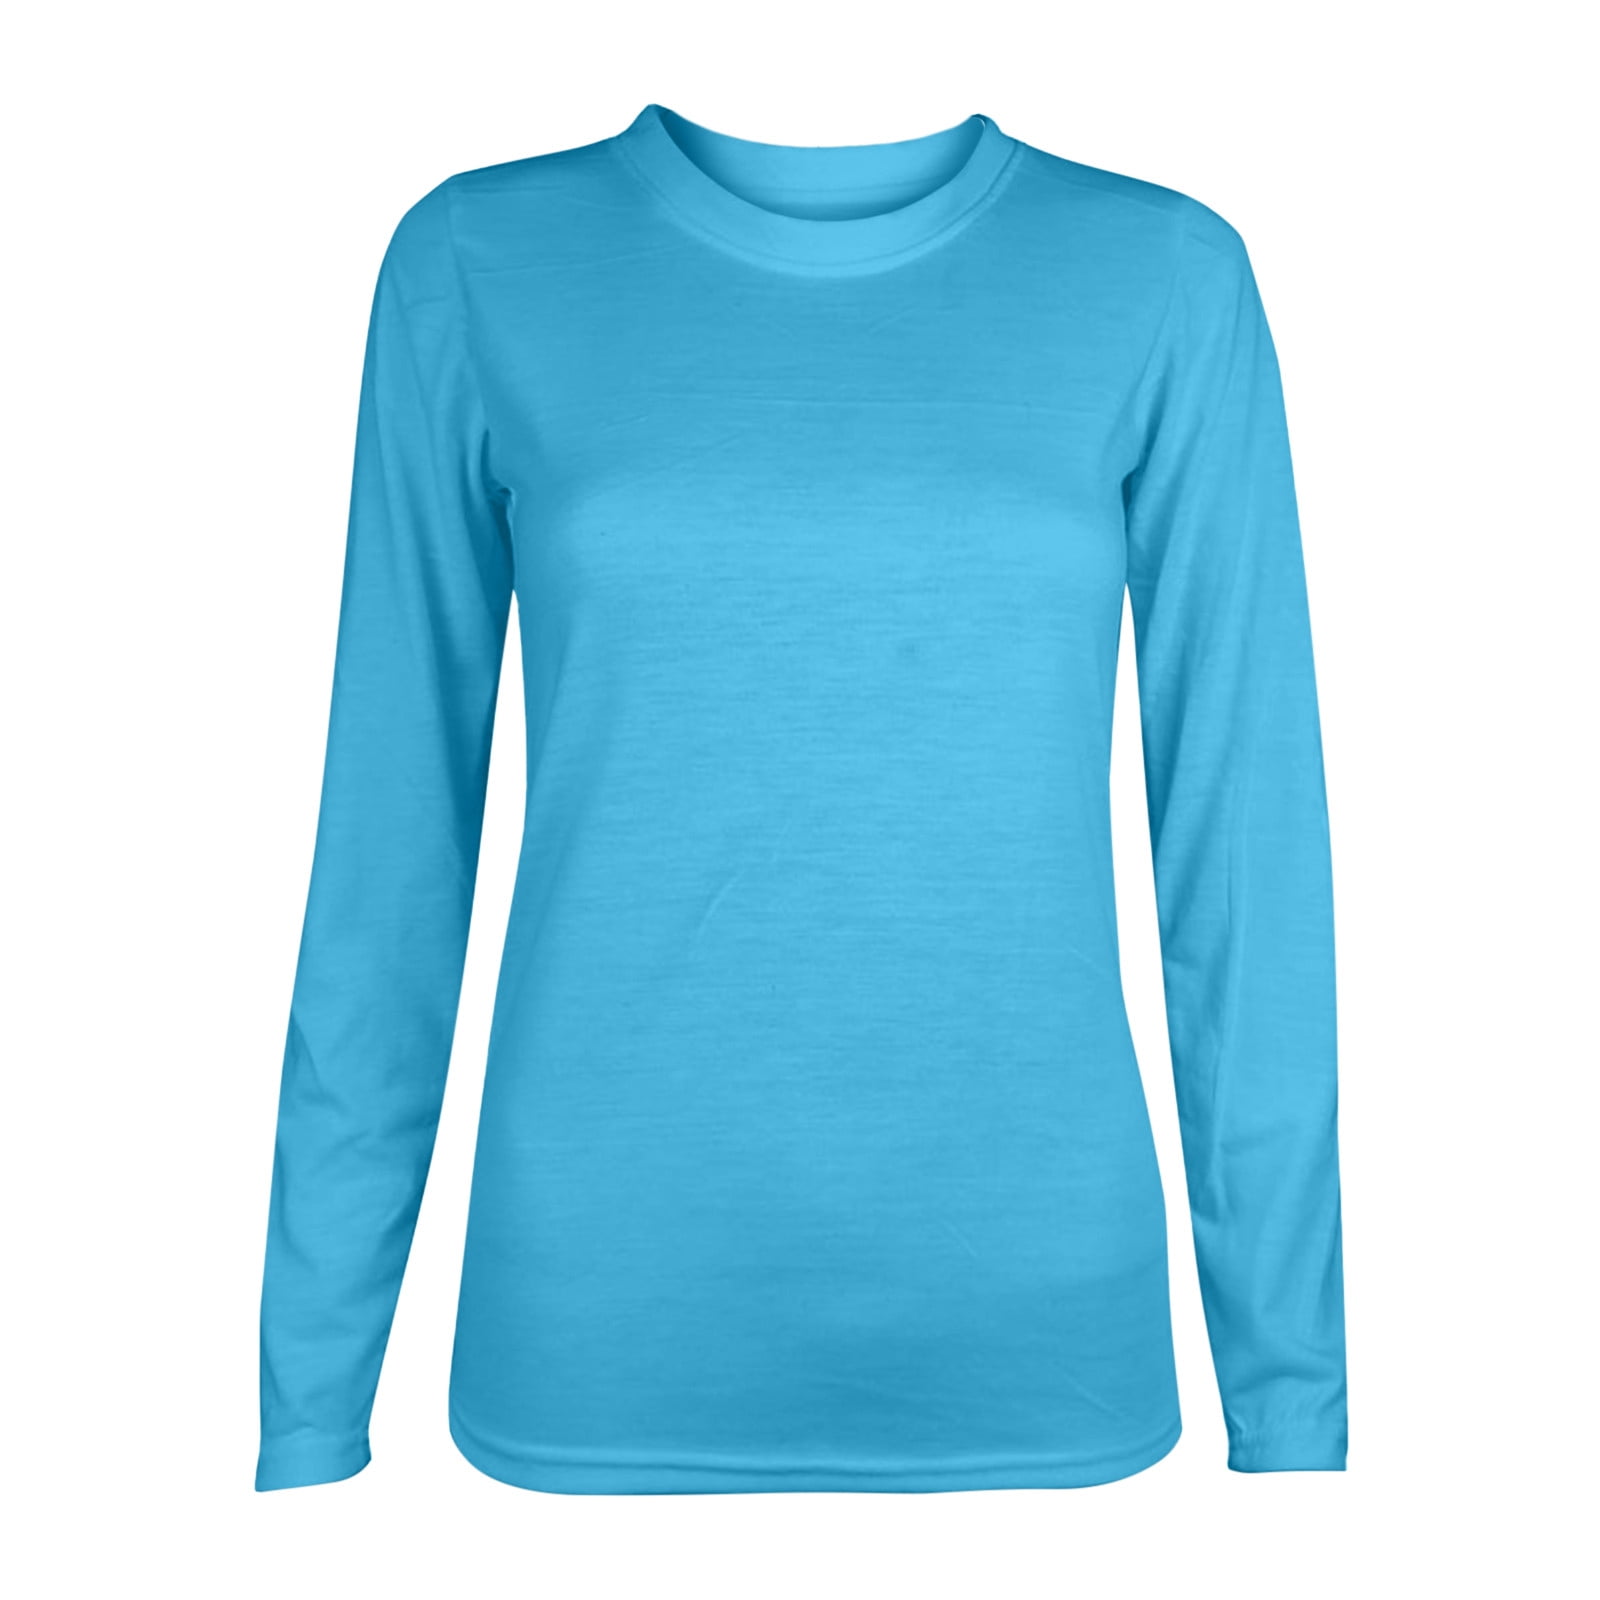 AherBiu Womens Tops Built in Bra Long Sleeve Crew Neck Comfy Pajama Tees  Solid Color Sleepwear Soft Tshirts